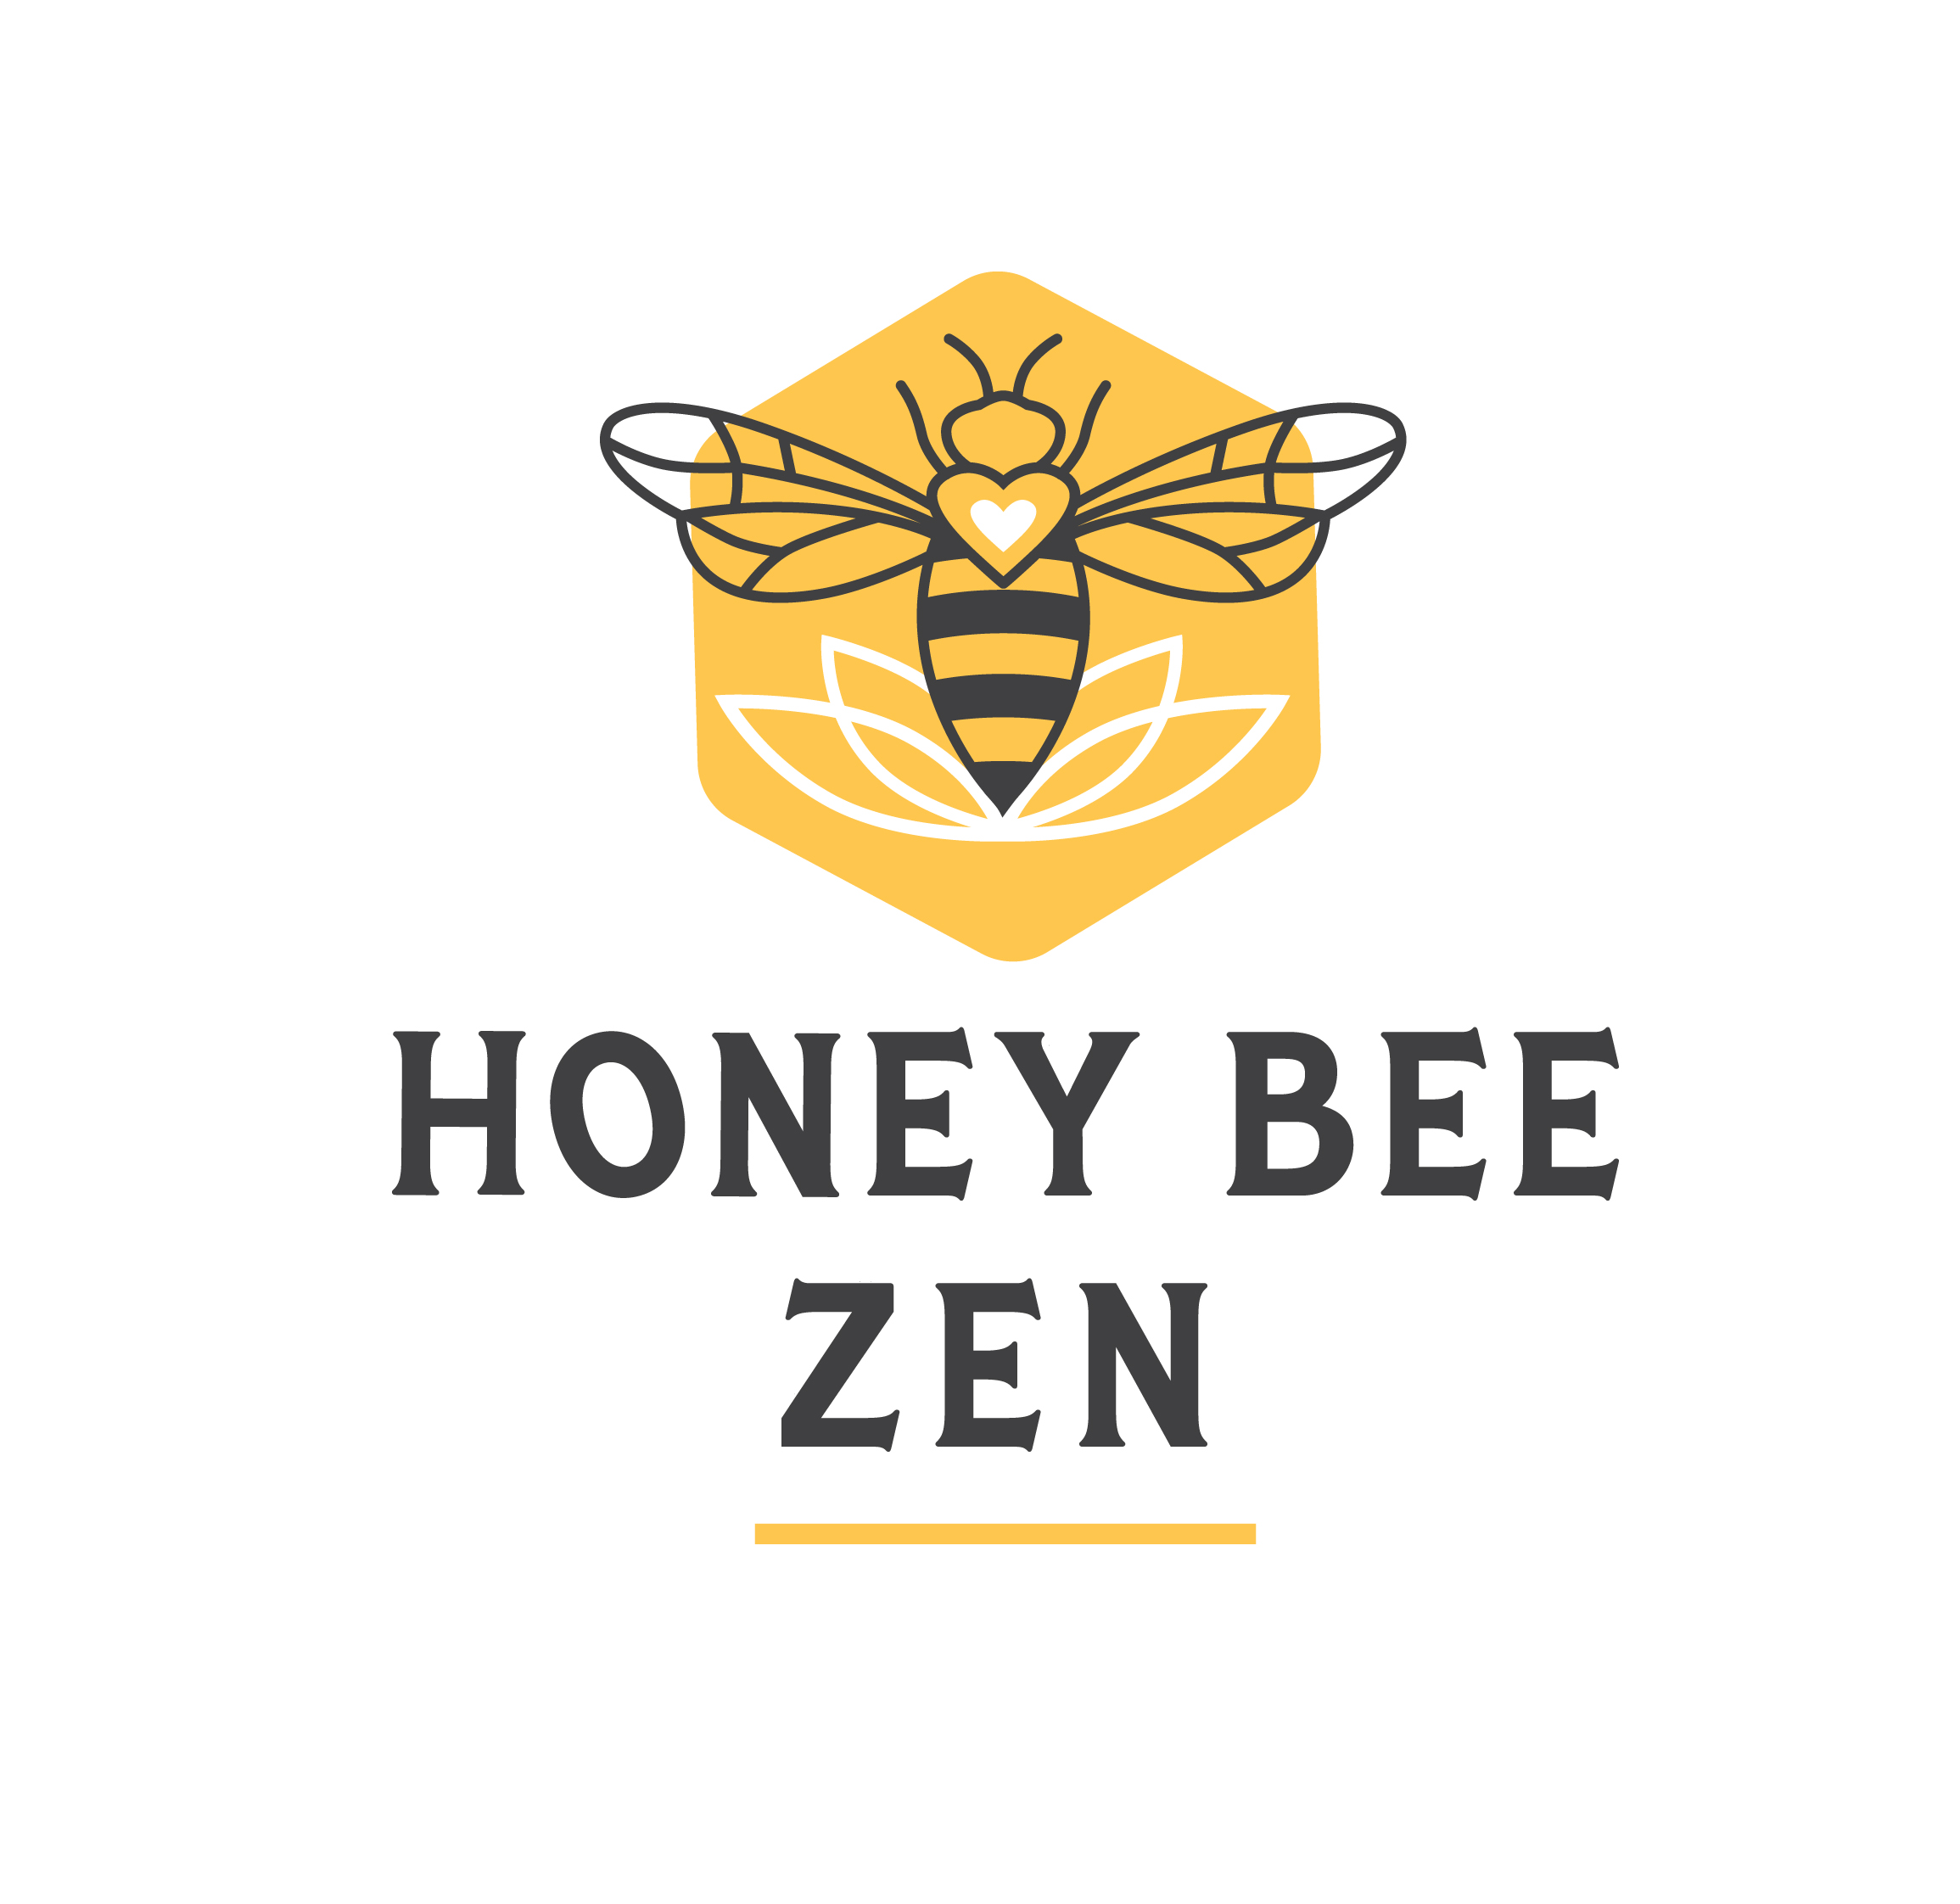 Honey Bee Zen More White Space